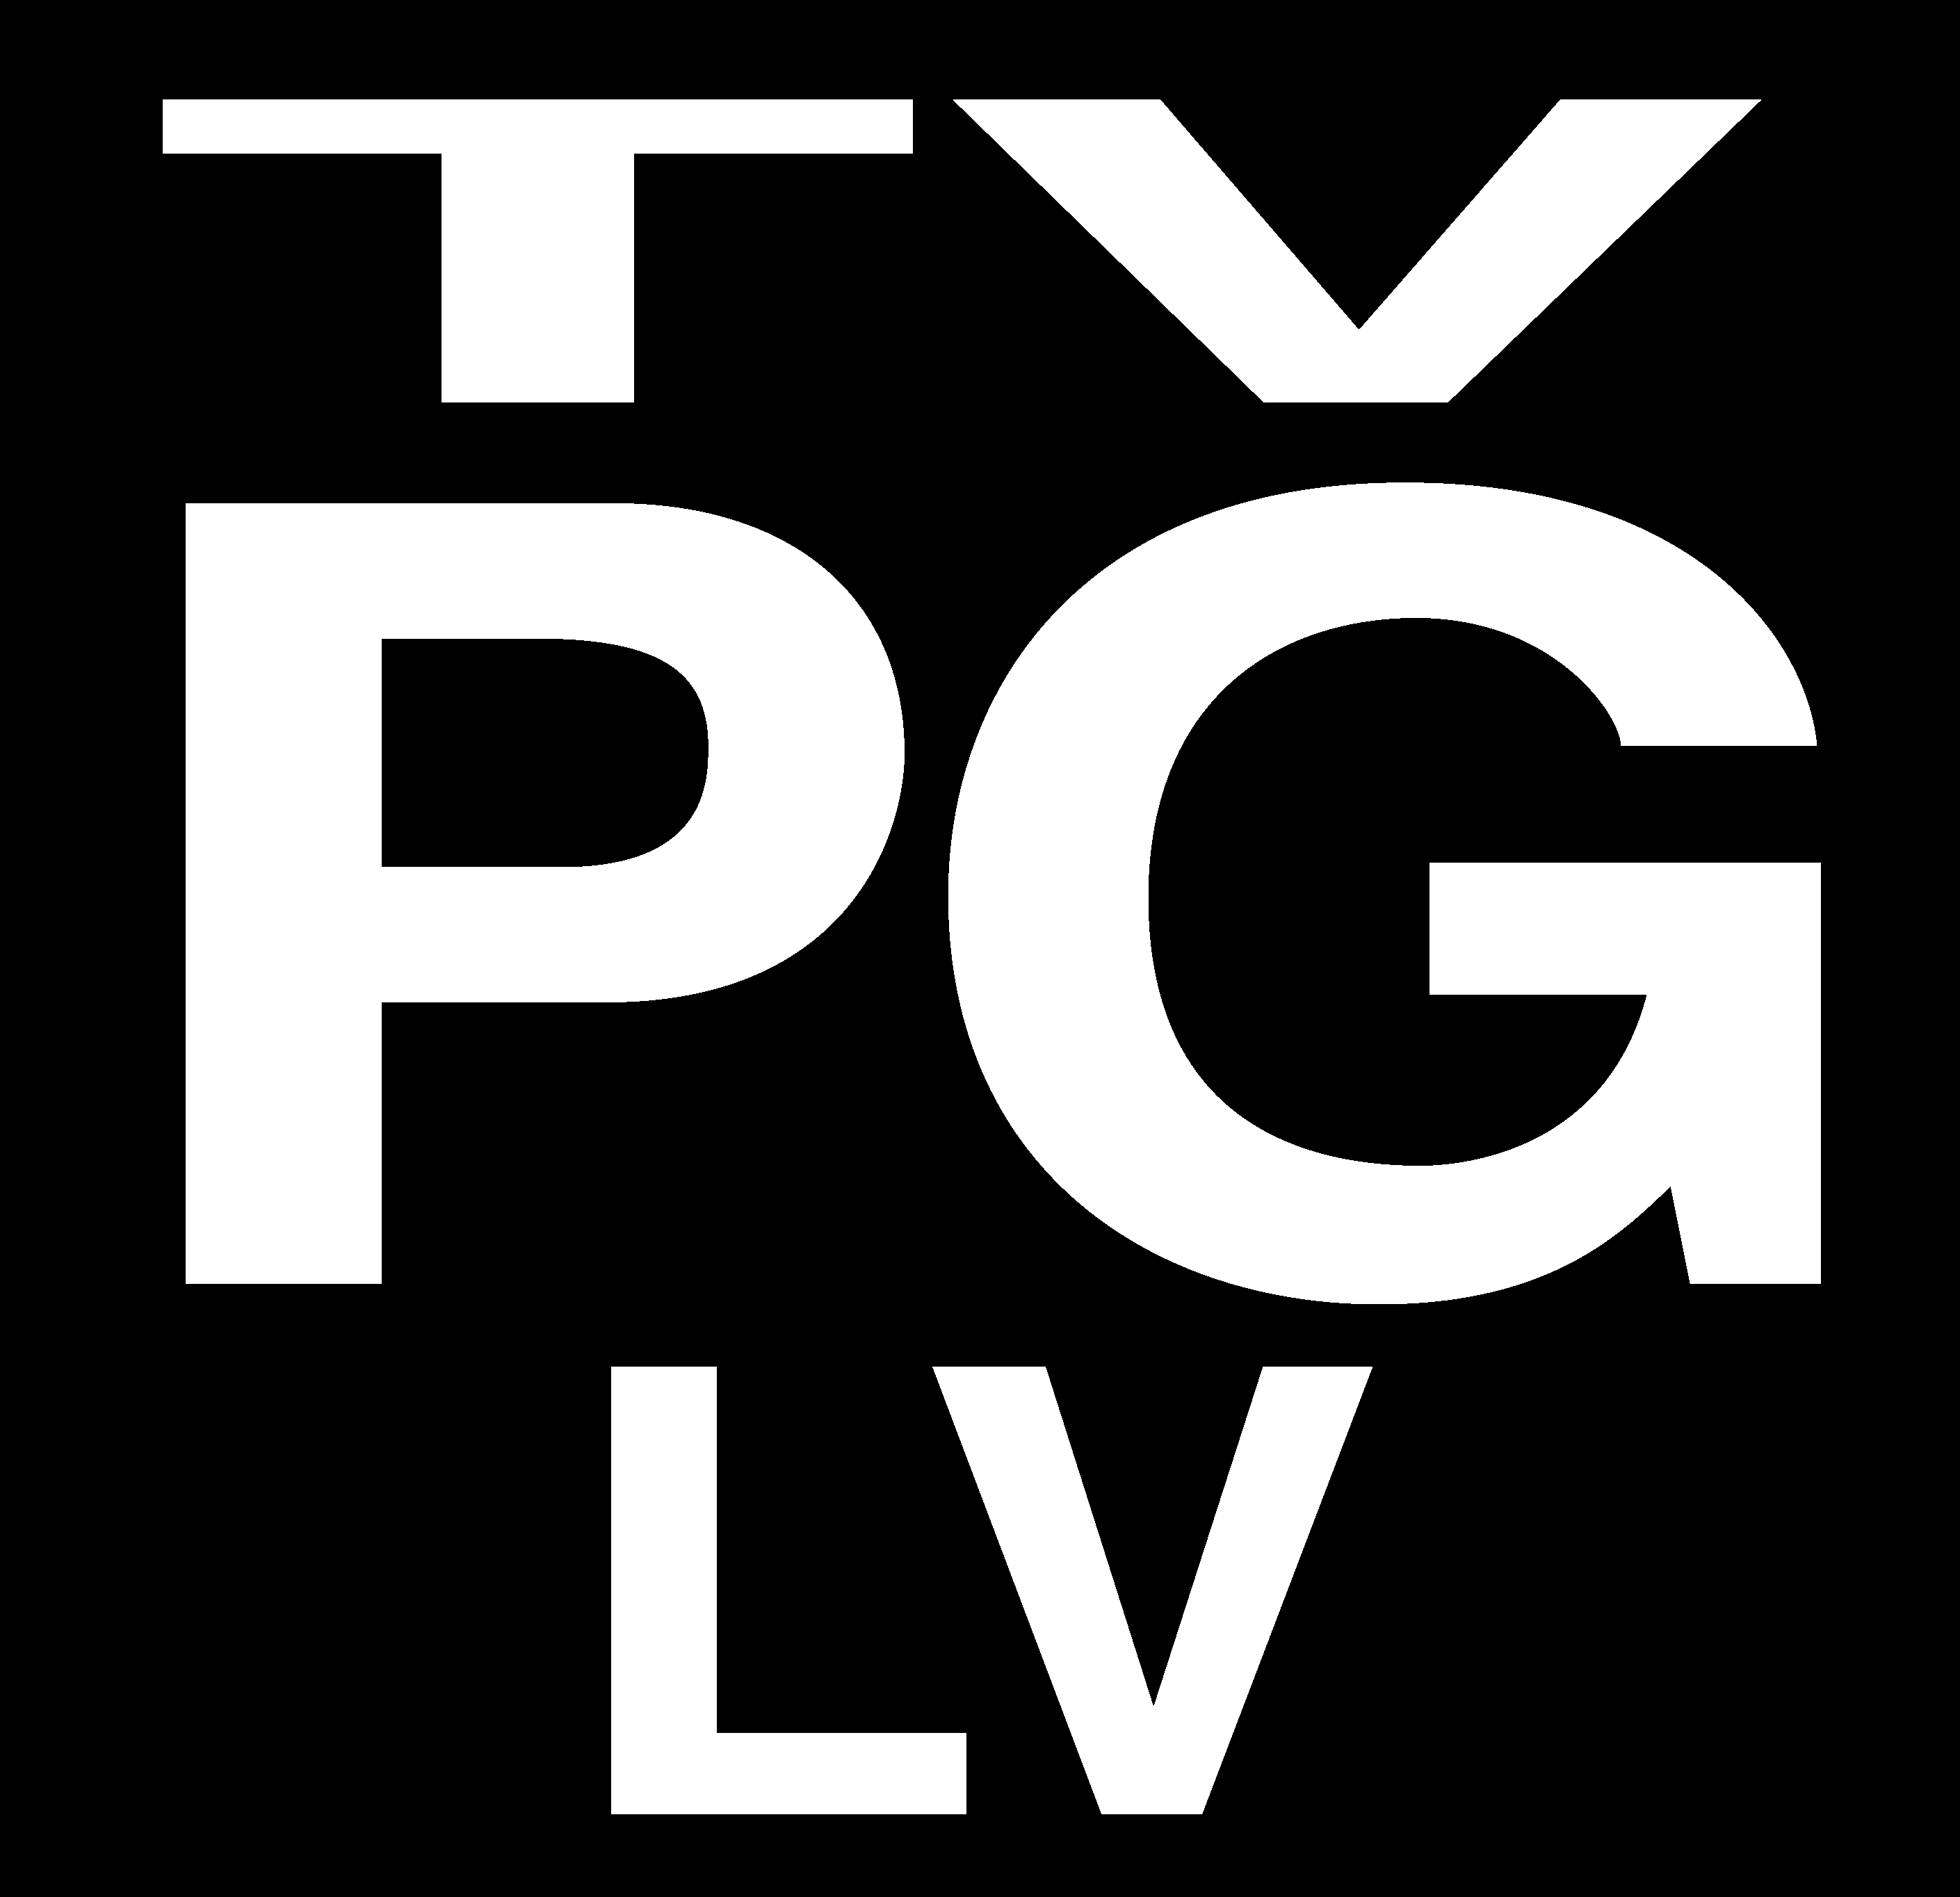 Black TV Logo - File:Black TV-PG-LV icon.png - Wikimedia Commons